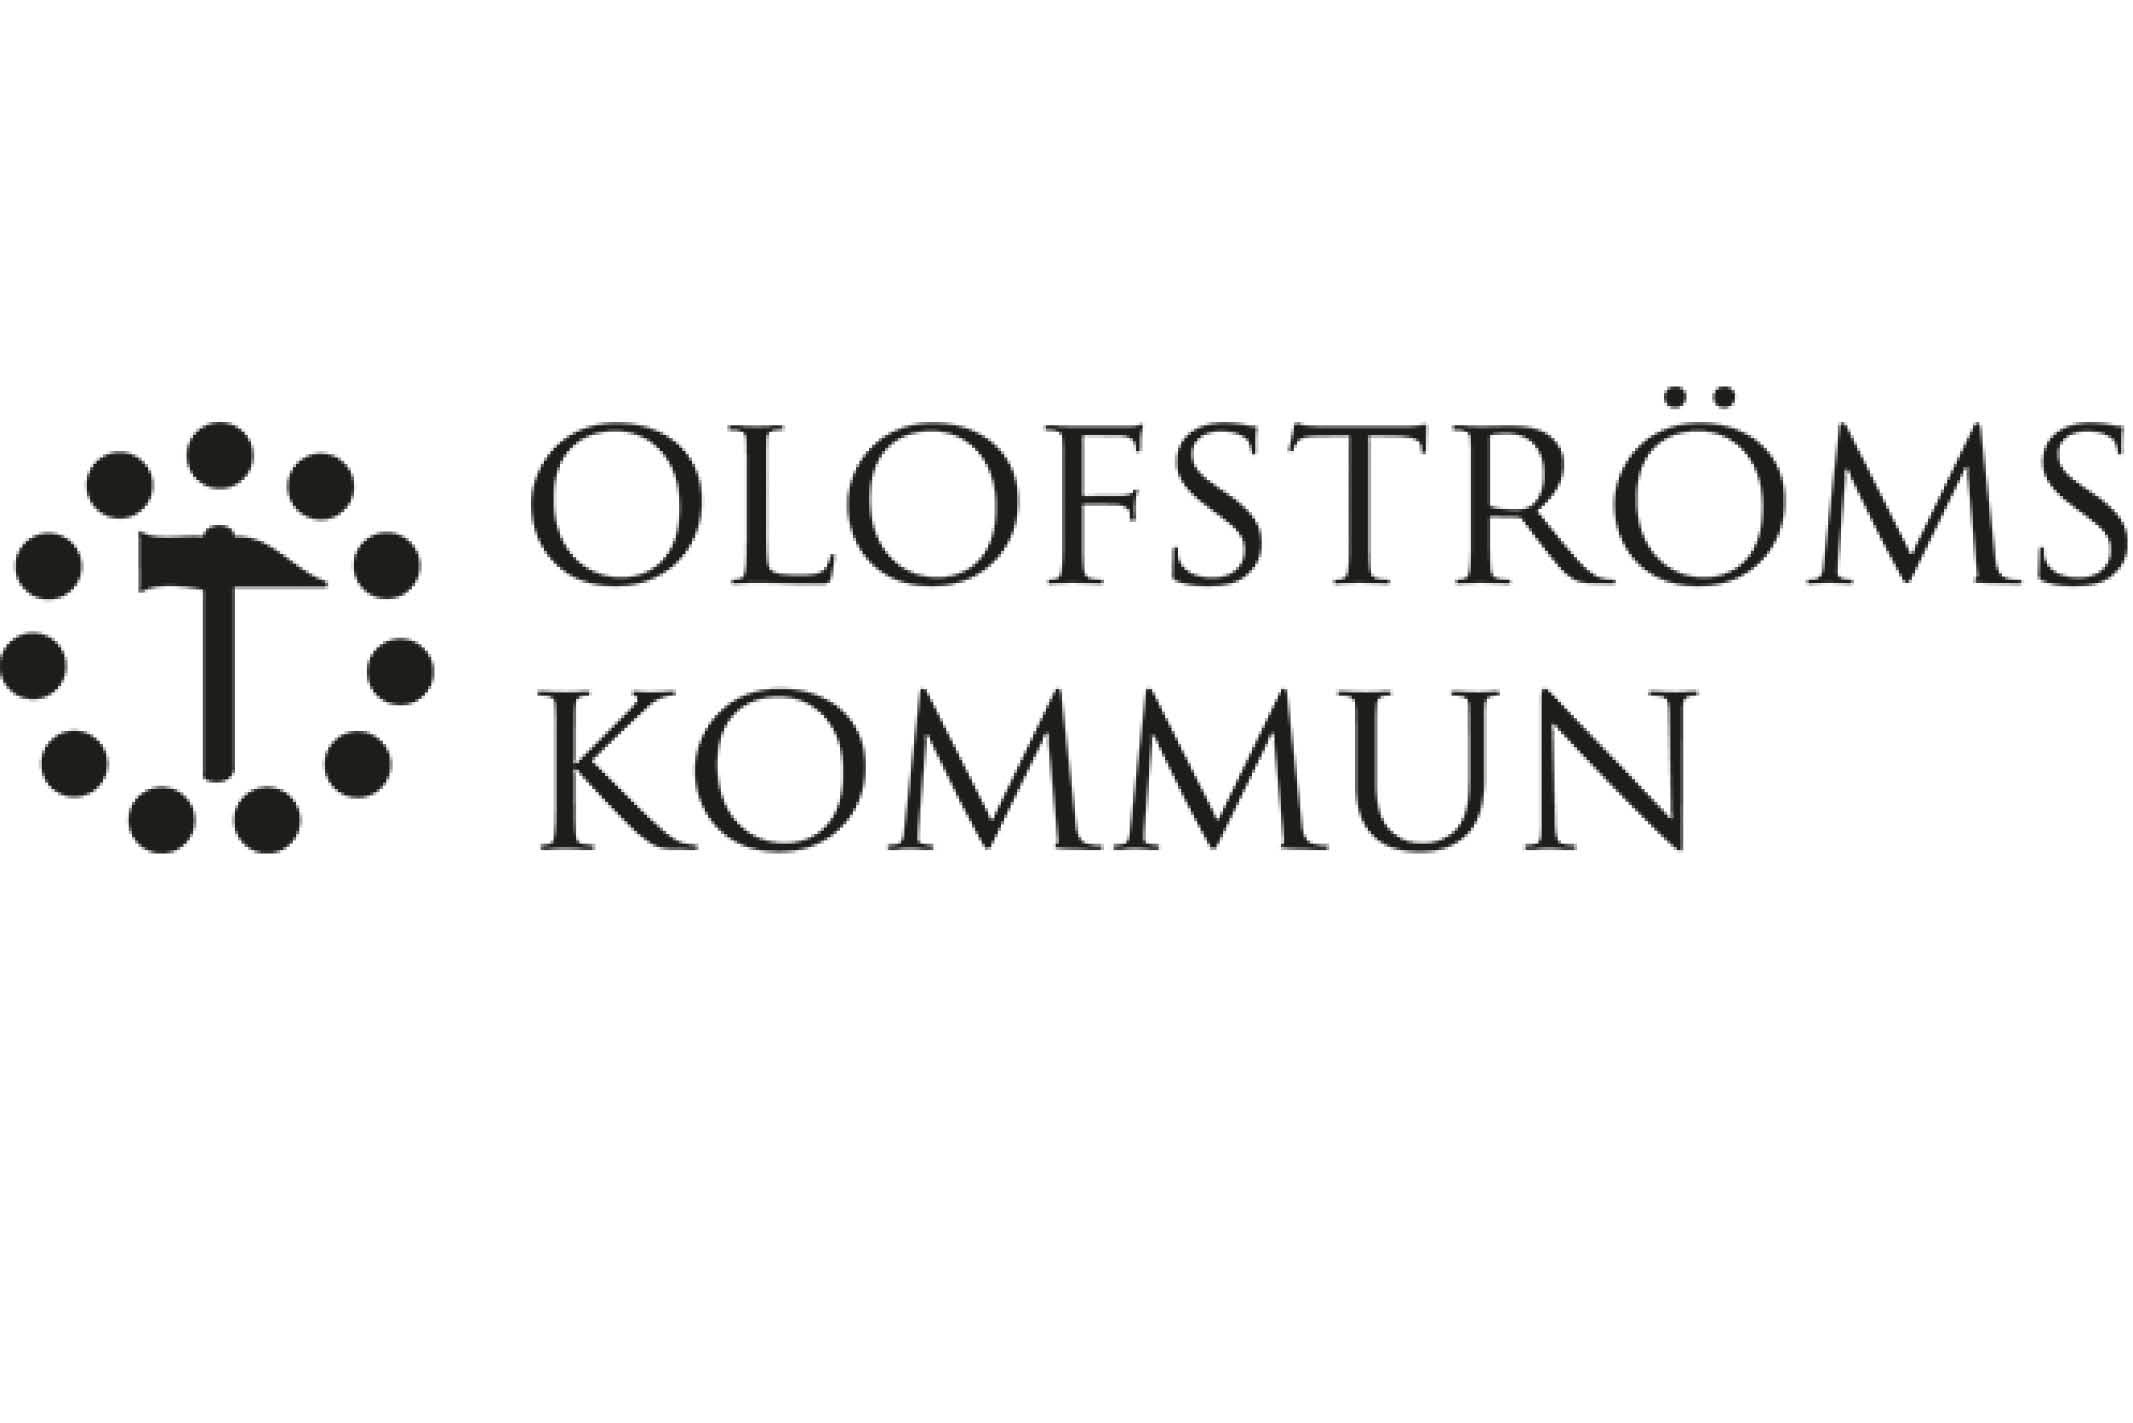 Olofströms kommuns logotyp bestående av kommunvapnet och texten Olofströms kommun